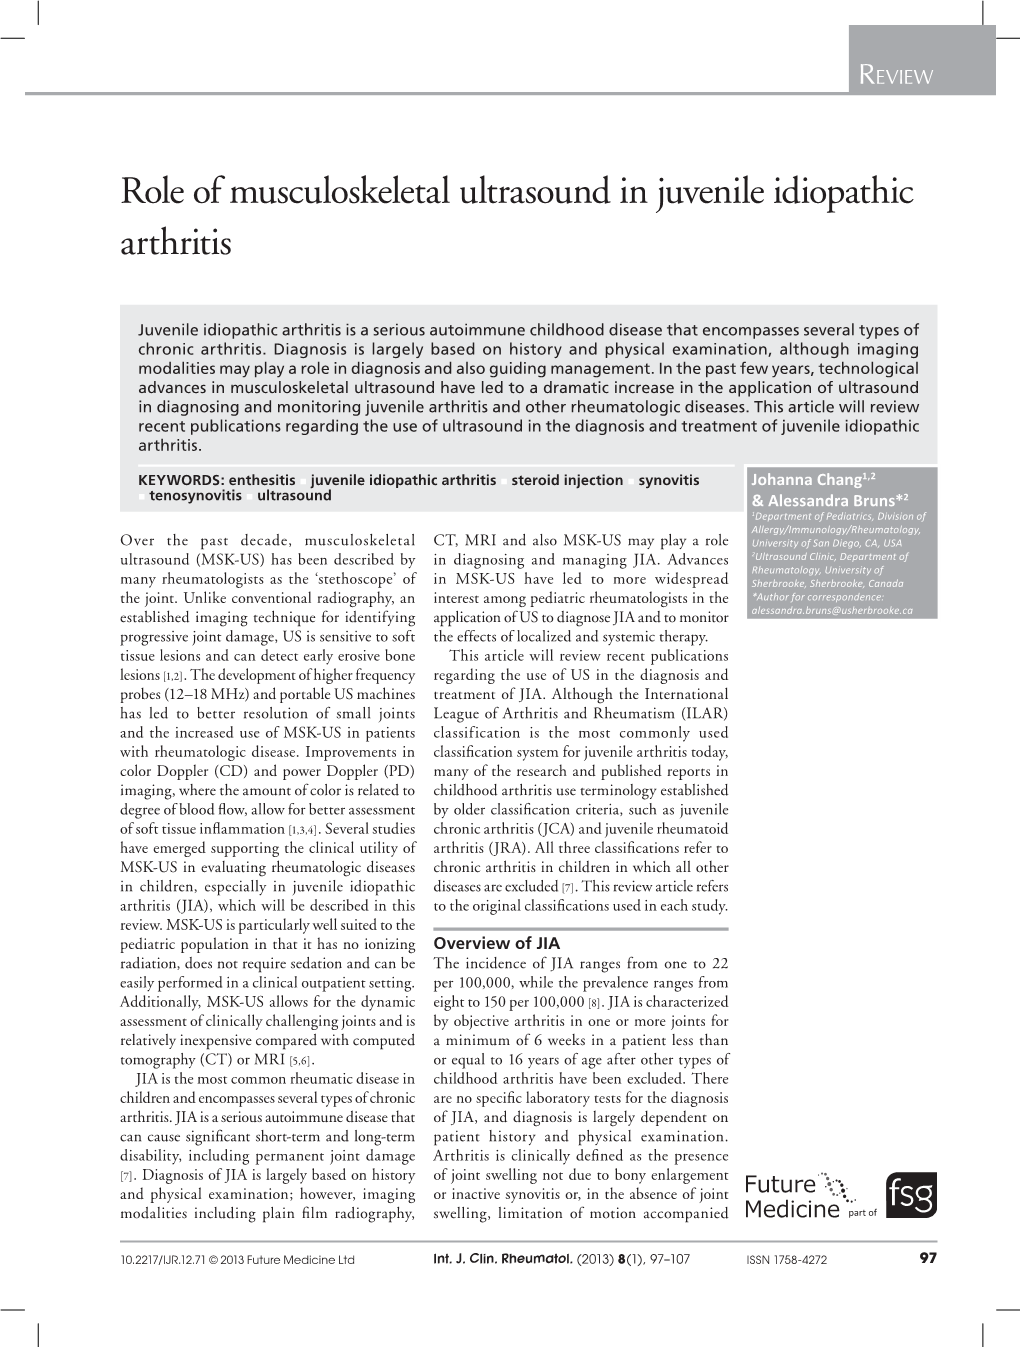 Role of Musculoskeletal Ultrasound in Juvenile Idiopathic Arthritis